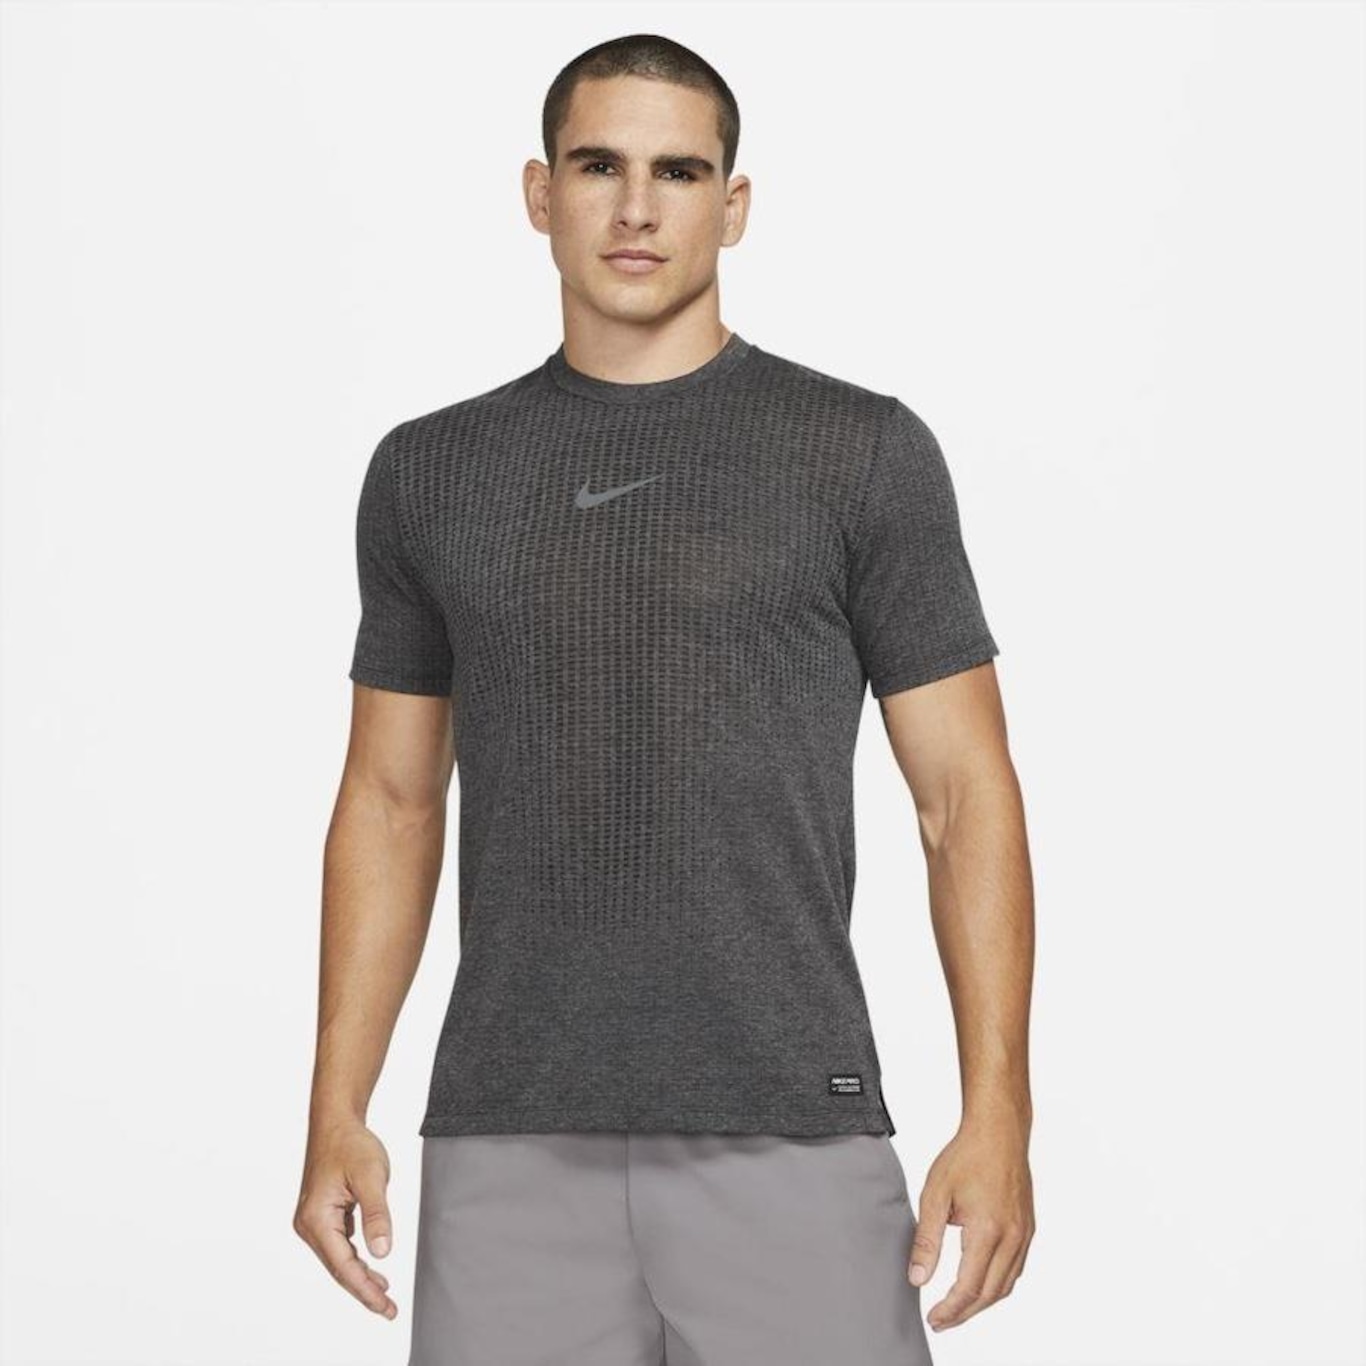 Camiseta Nike Pro Dri-fit Masculina